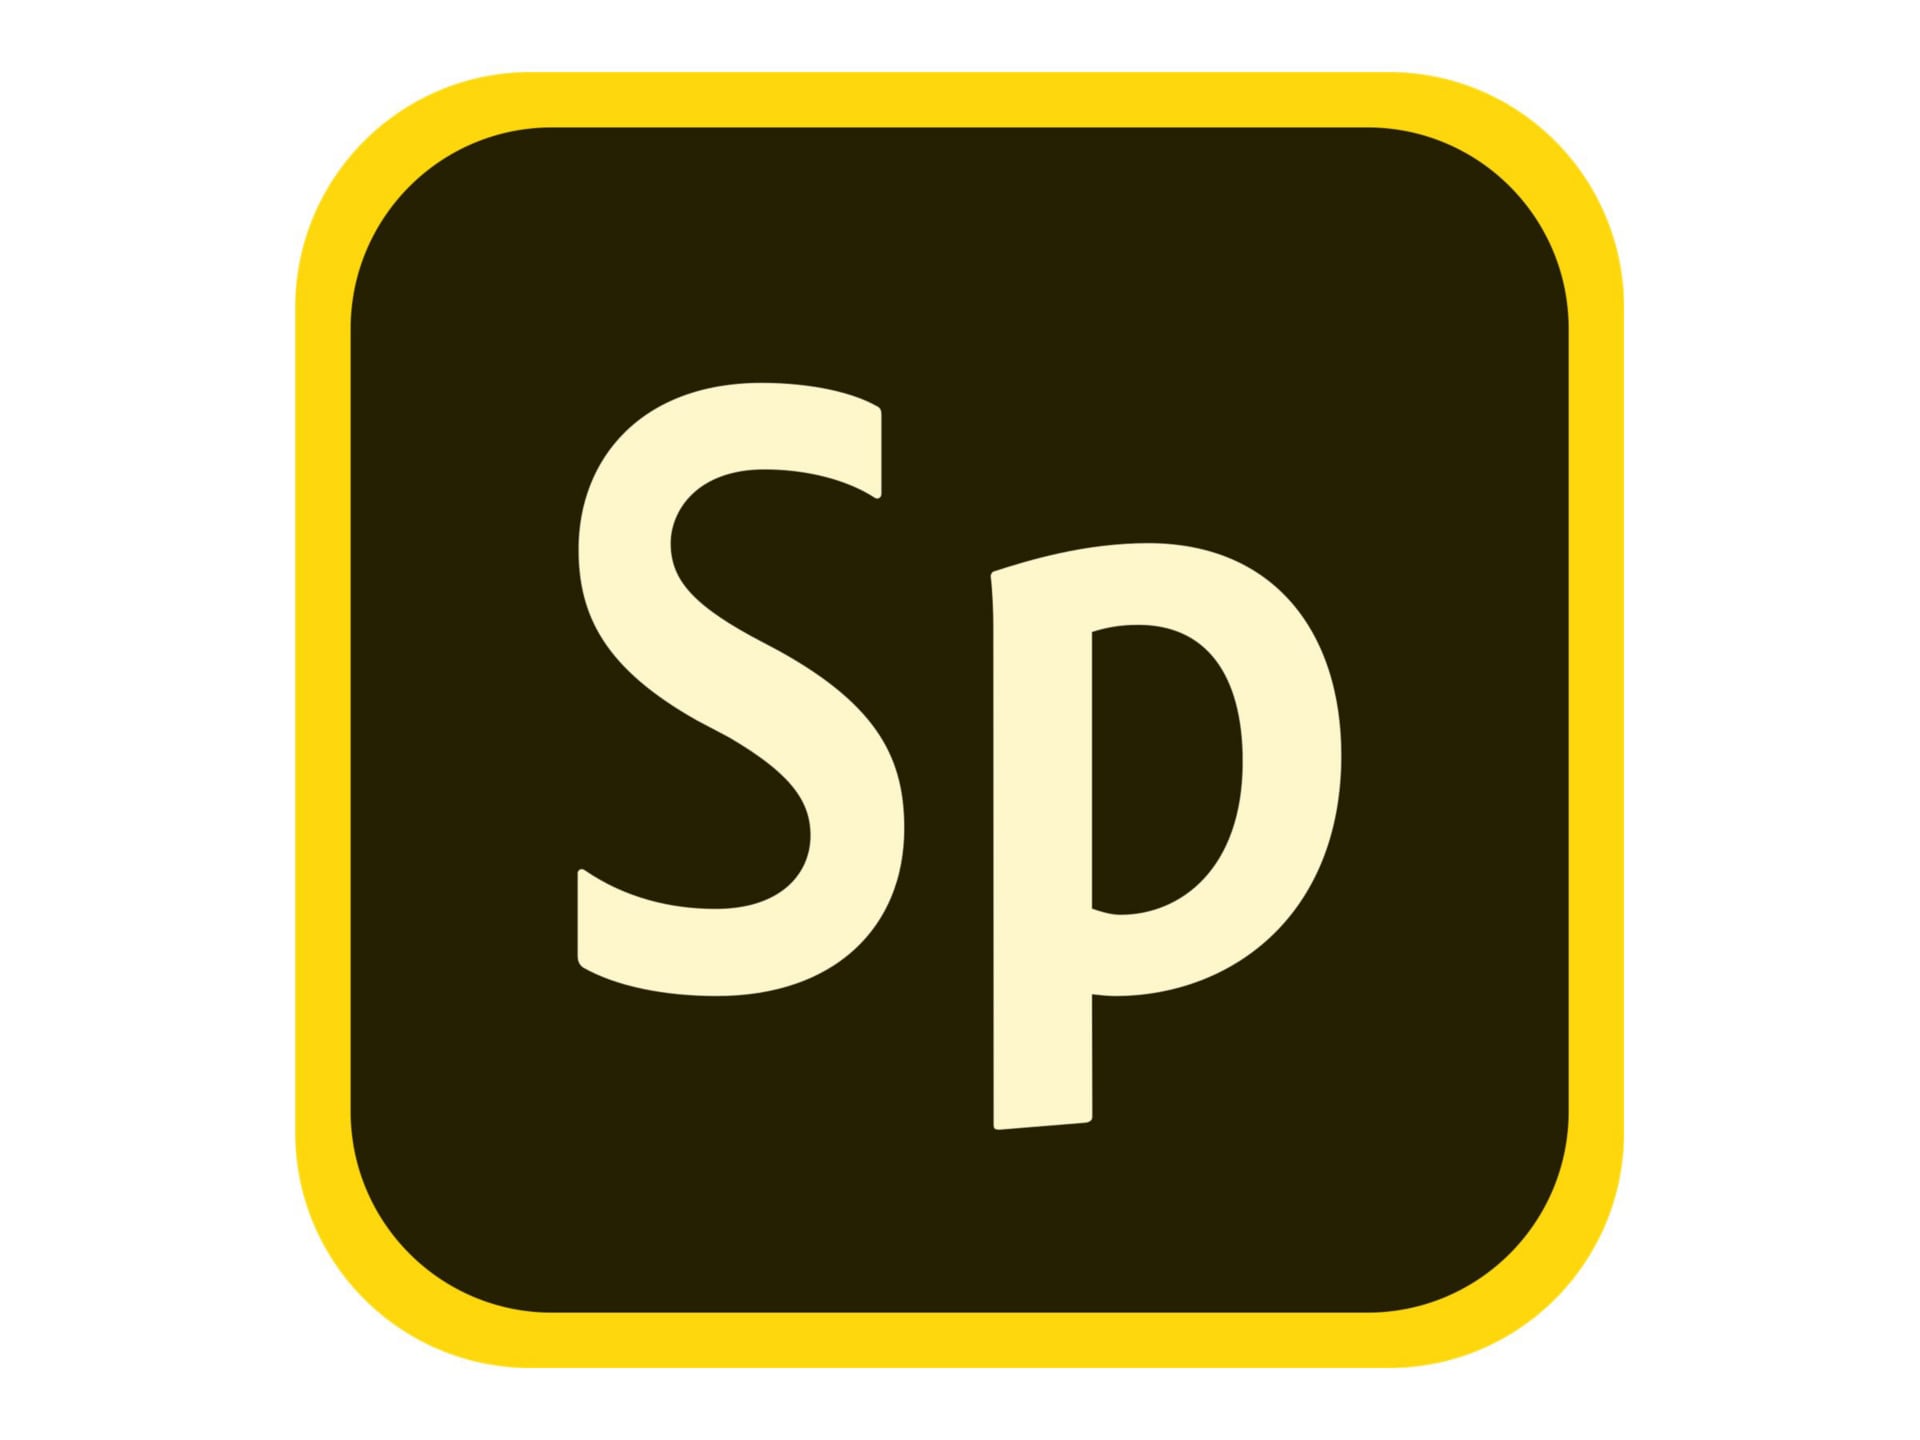 Adobe Spark for Enterprise - Enterprise Licensing Subscription New (monthly